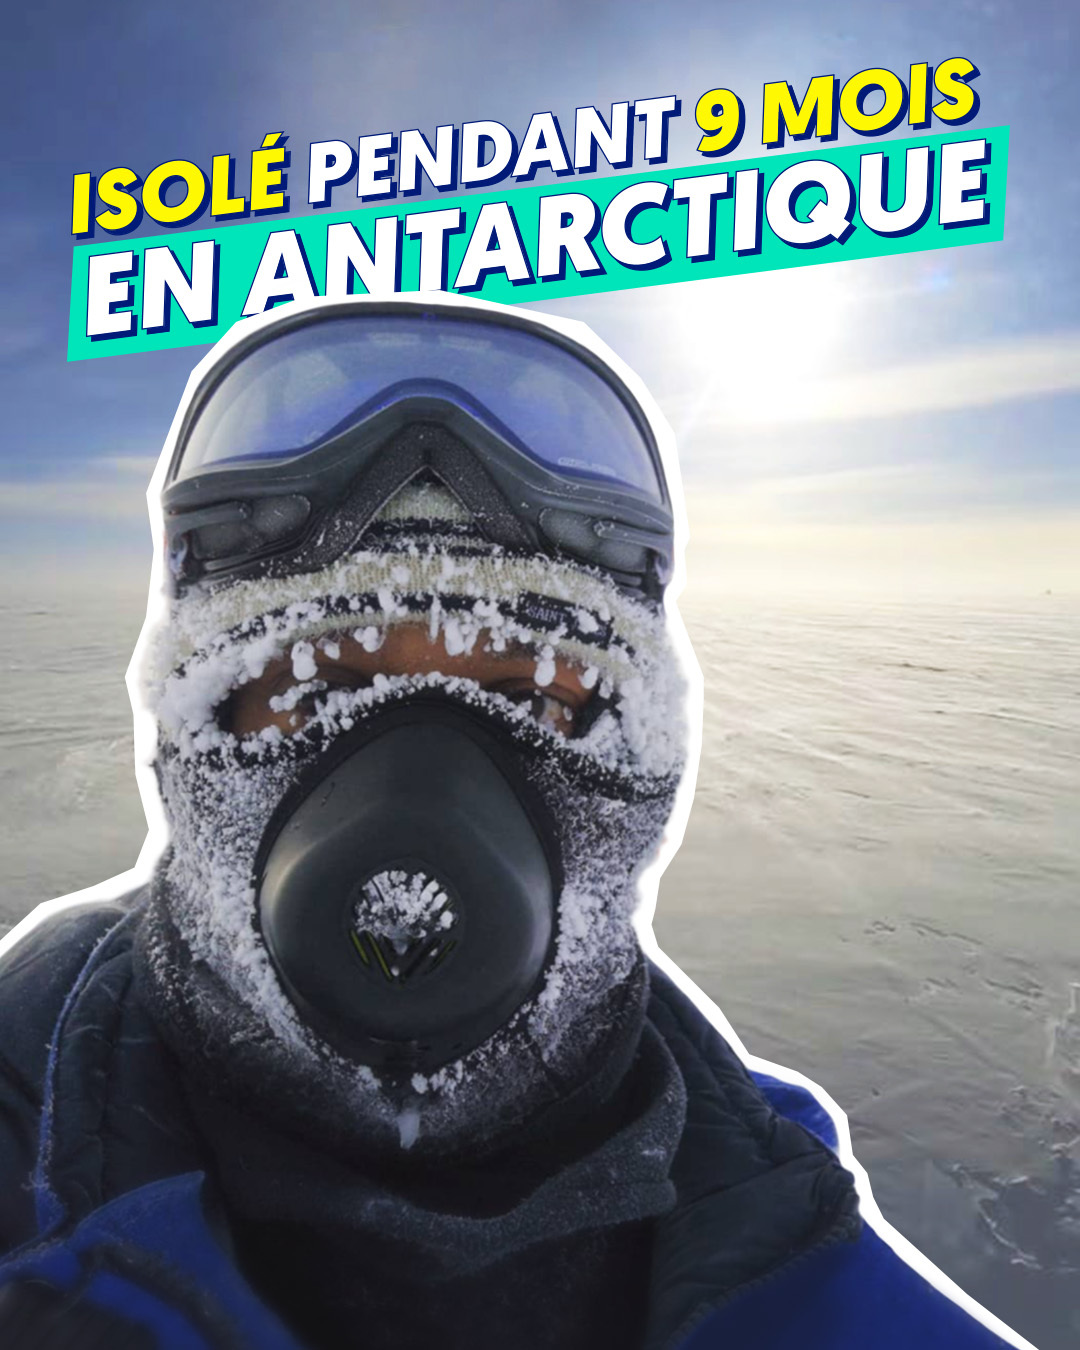 Isolé pendant 9 mois en antartique